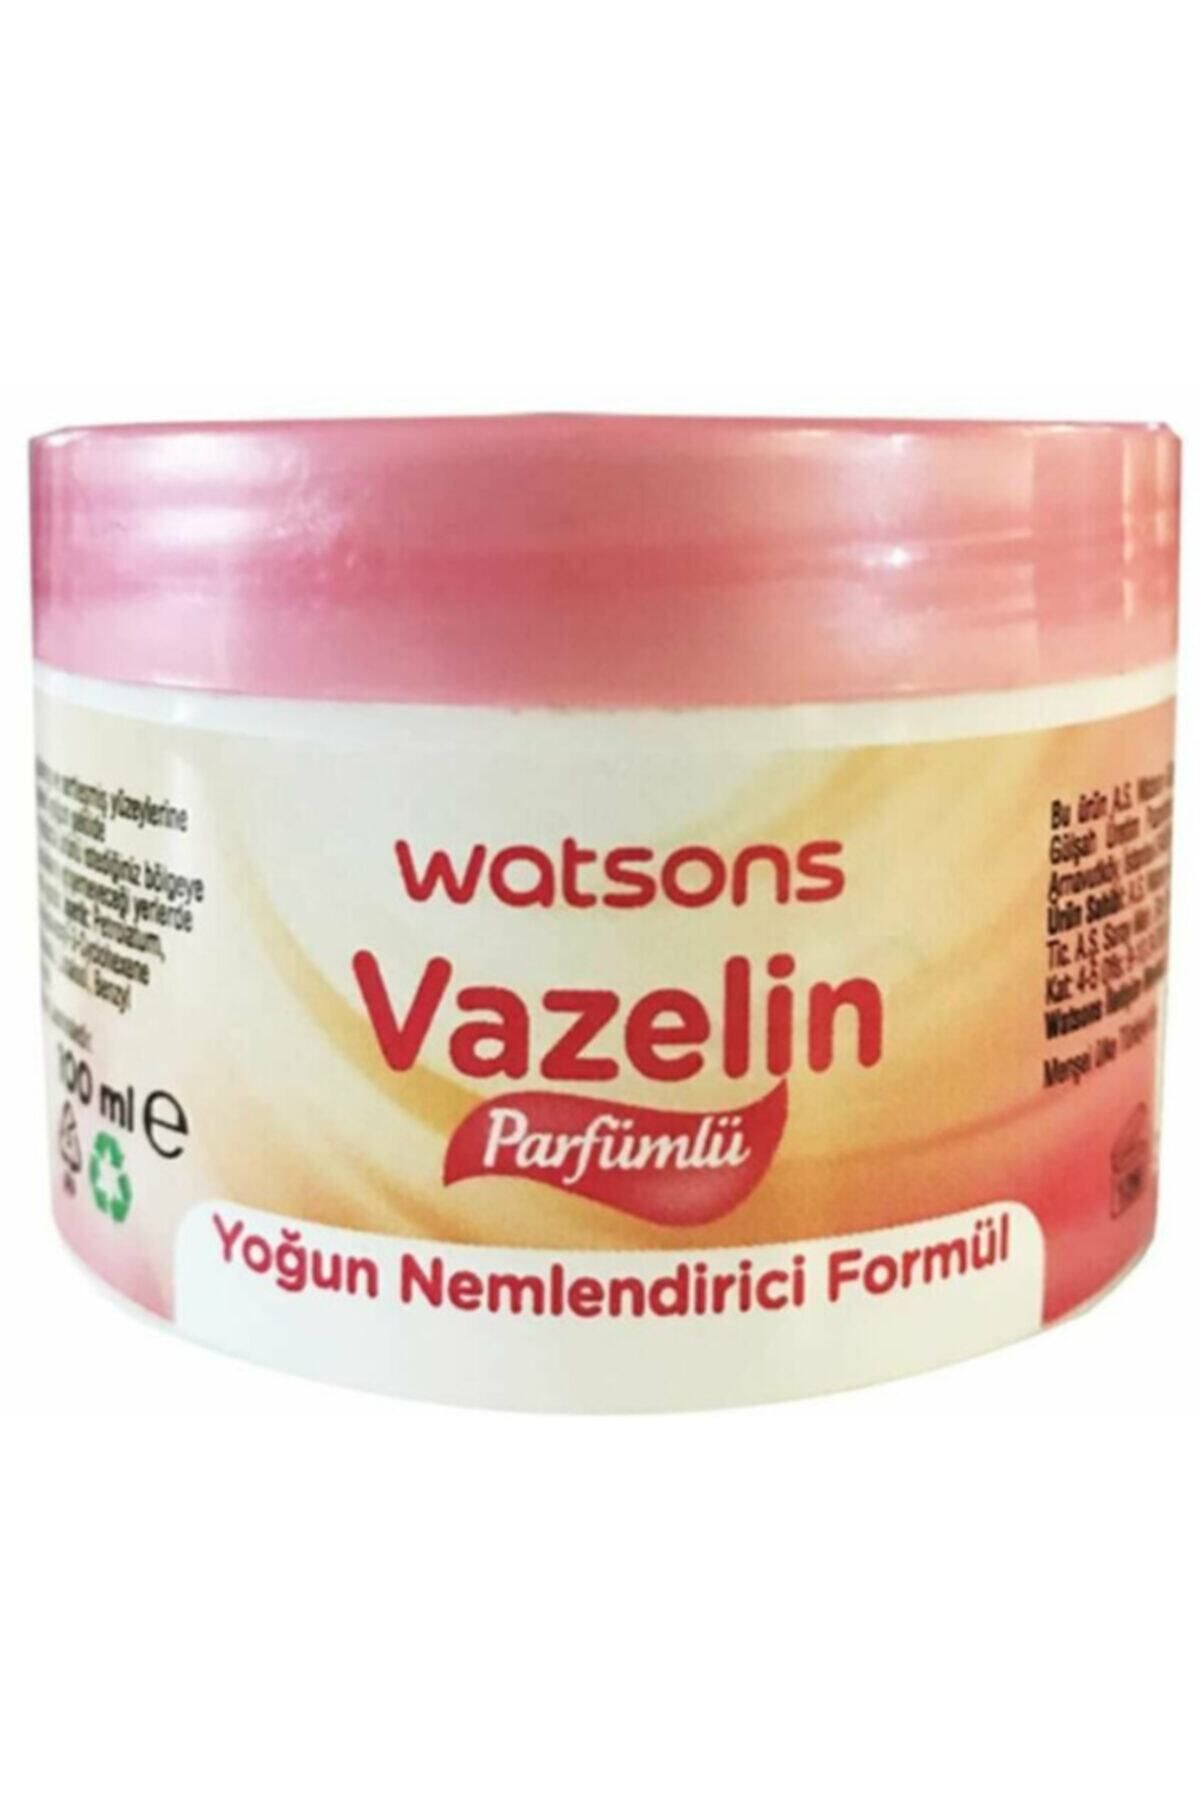 Watsons Parfümlü Vazelin 100 ml